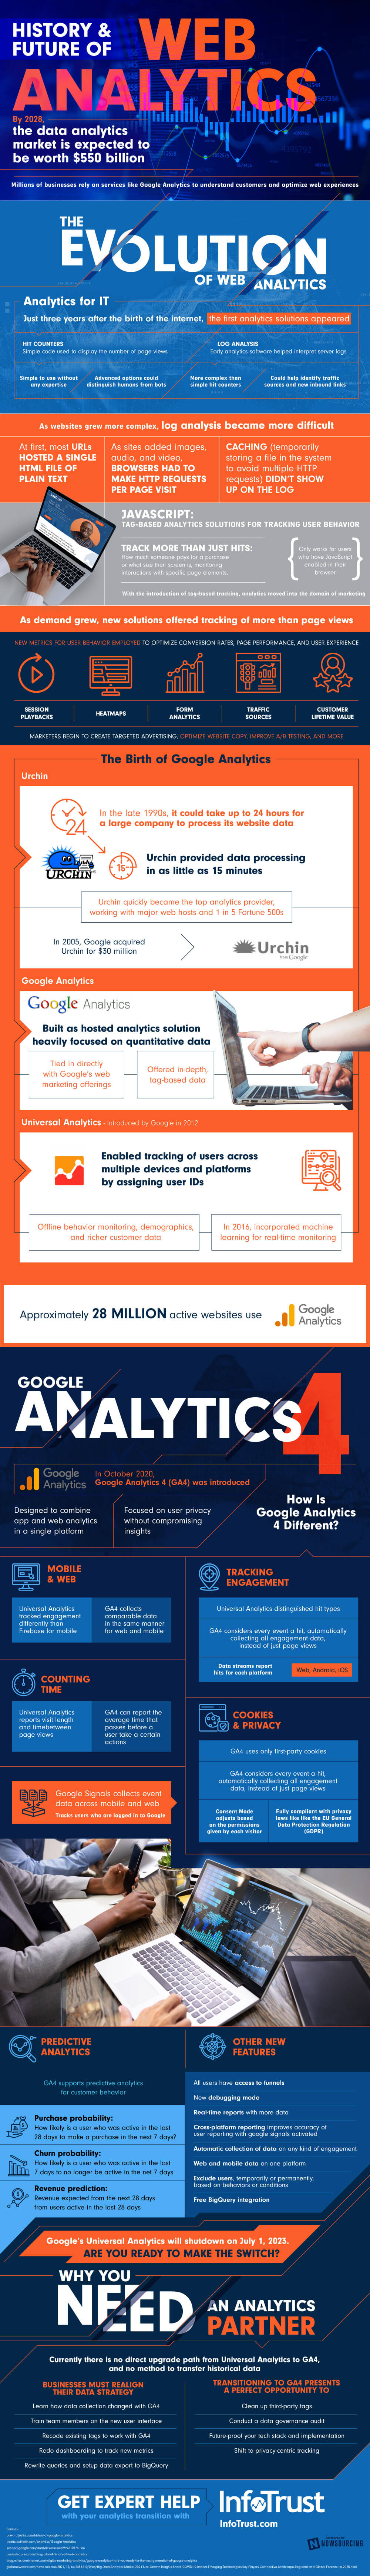 The Future of Google Analytics 4